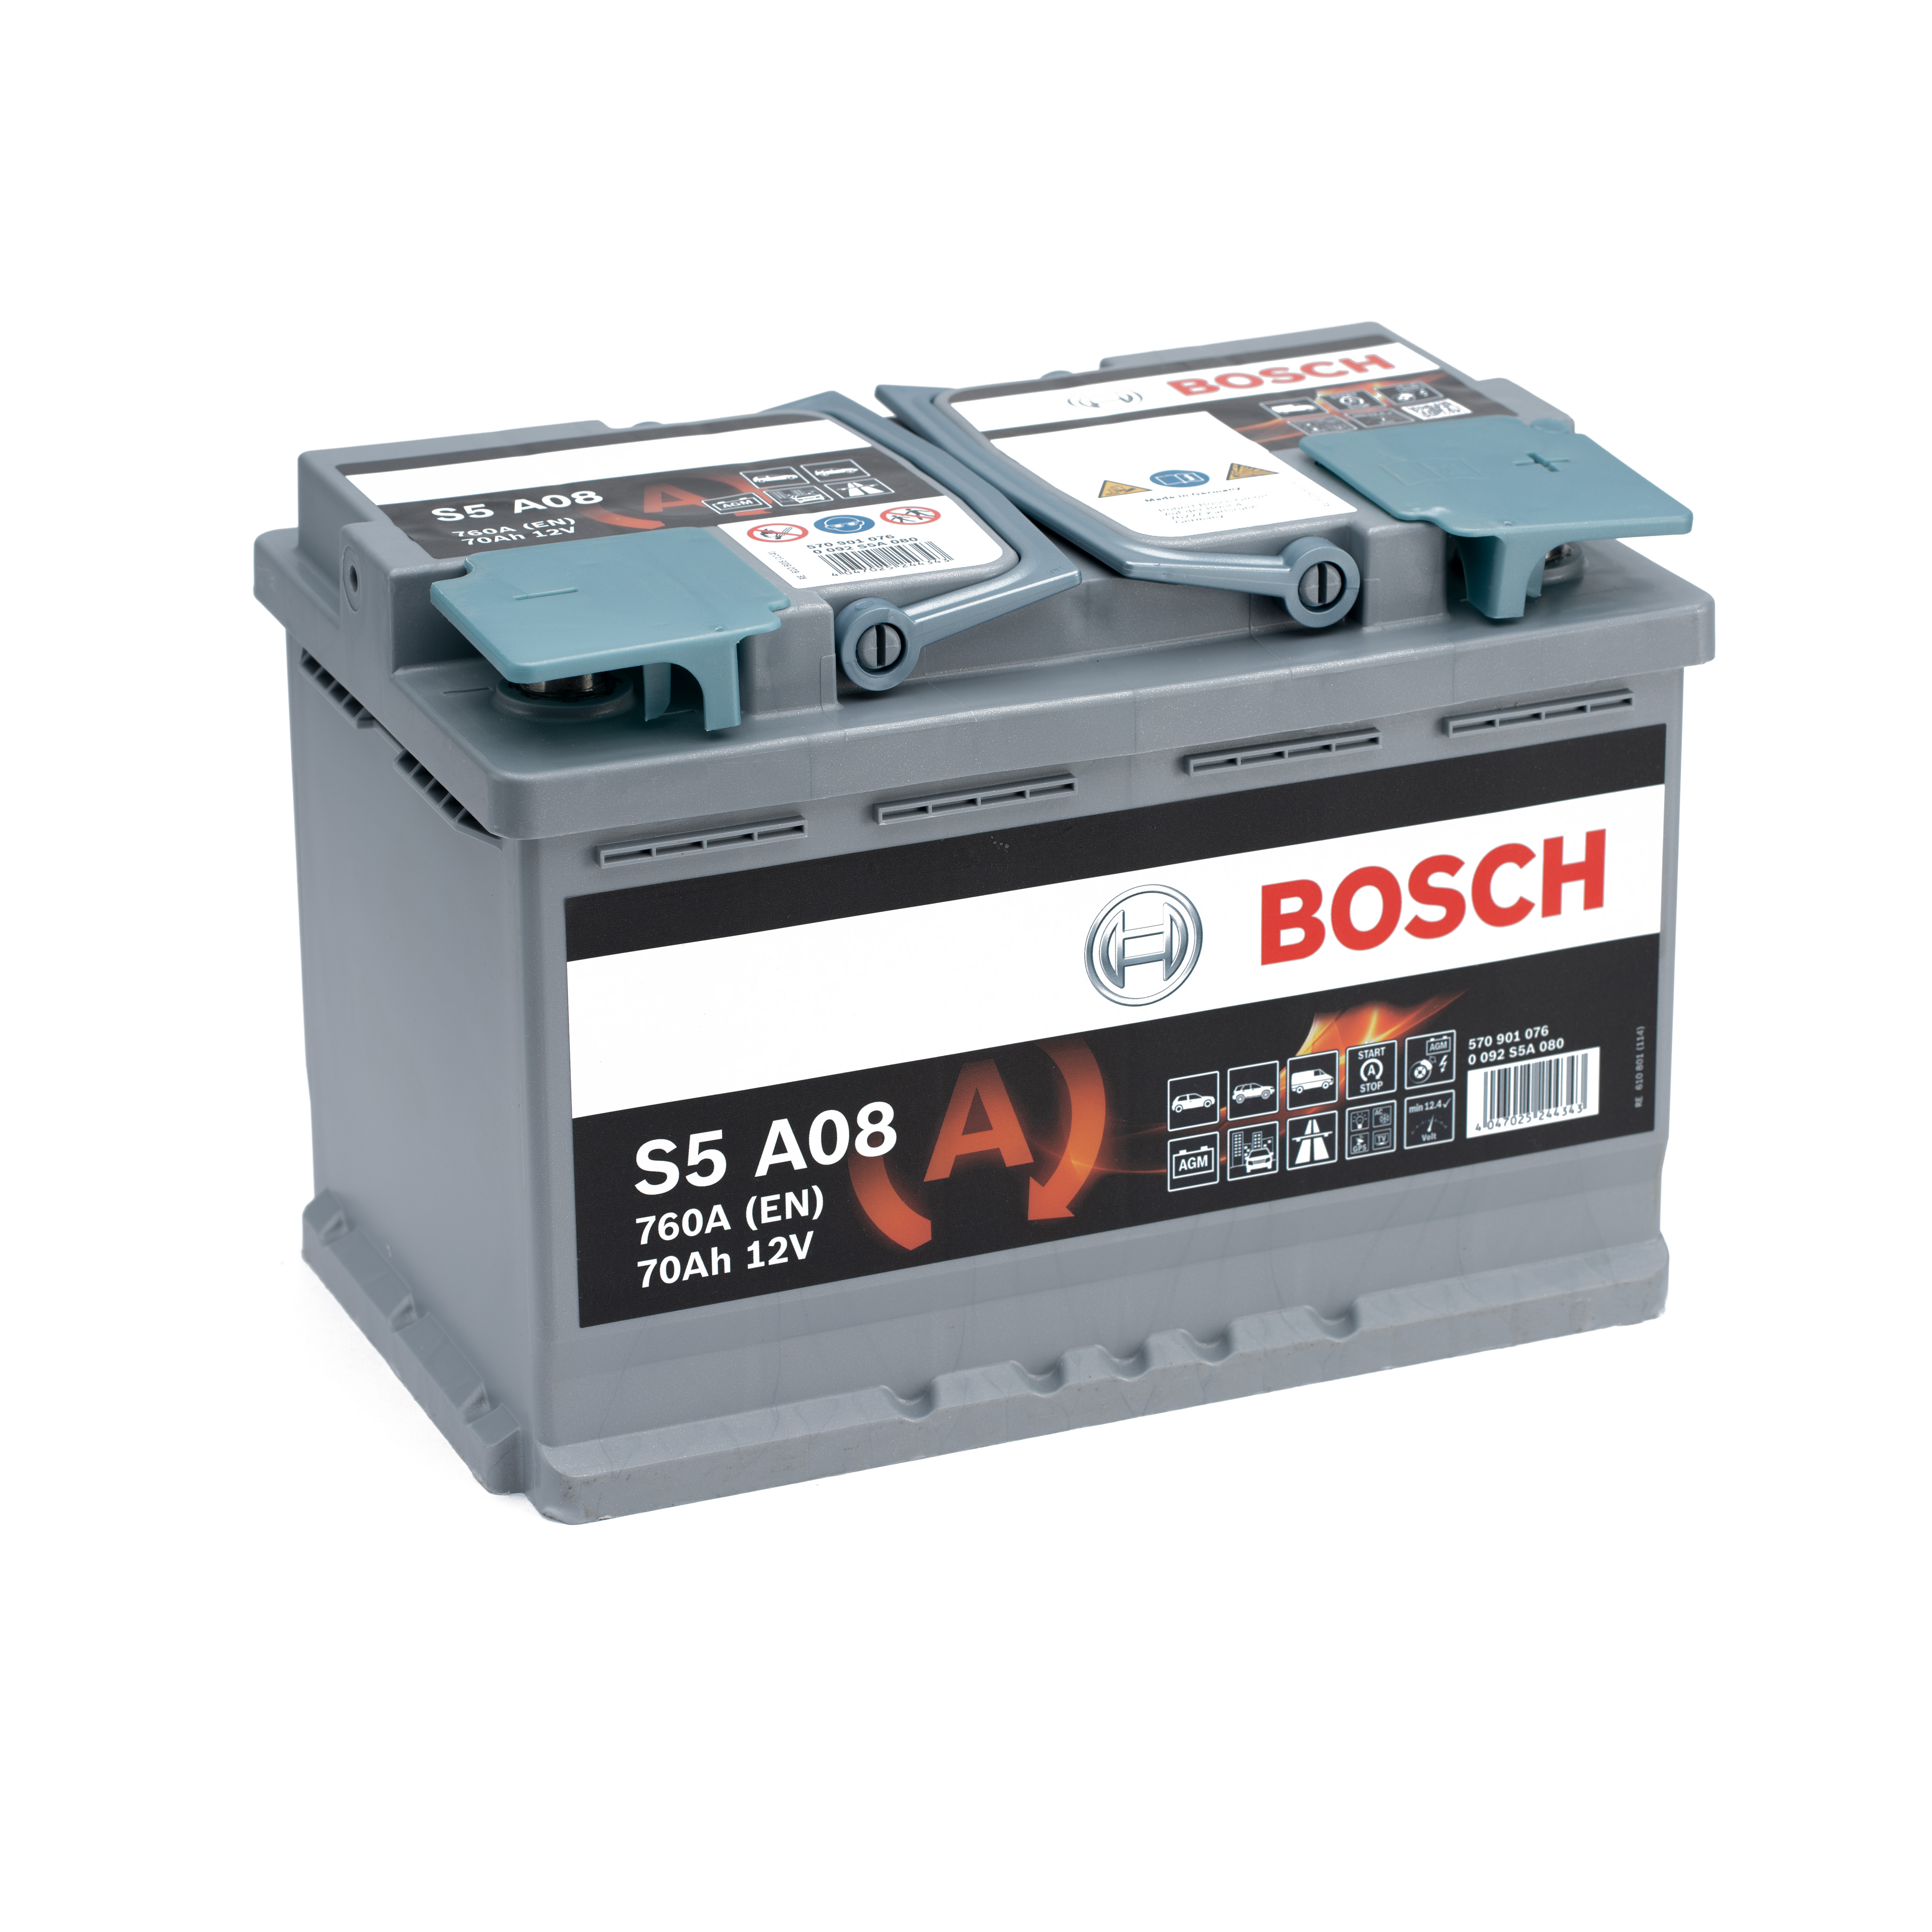 https://swissbatt24.ch/media/image/81/e2/67/Bosch-S5-A08-AGM-70Ah-Autobatterie-570901076.jpg